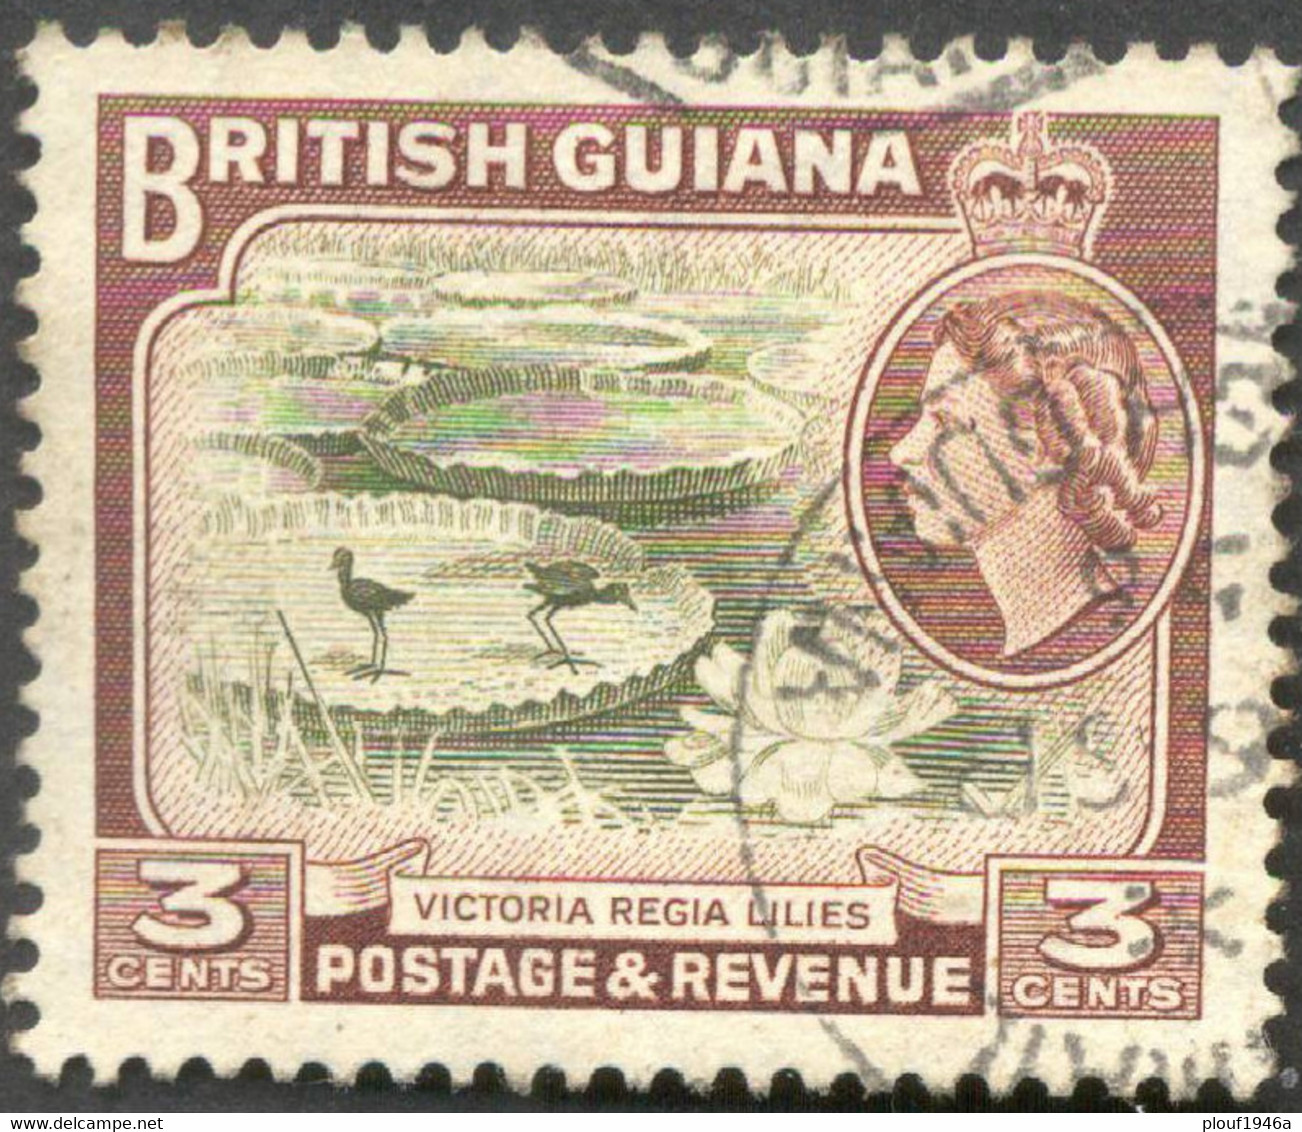 Pays : 214 (Guyane Britannique)  Yvert Et Tellier N° : 187 (o) - Guyane Britannique (...-1966)